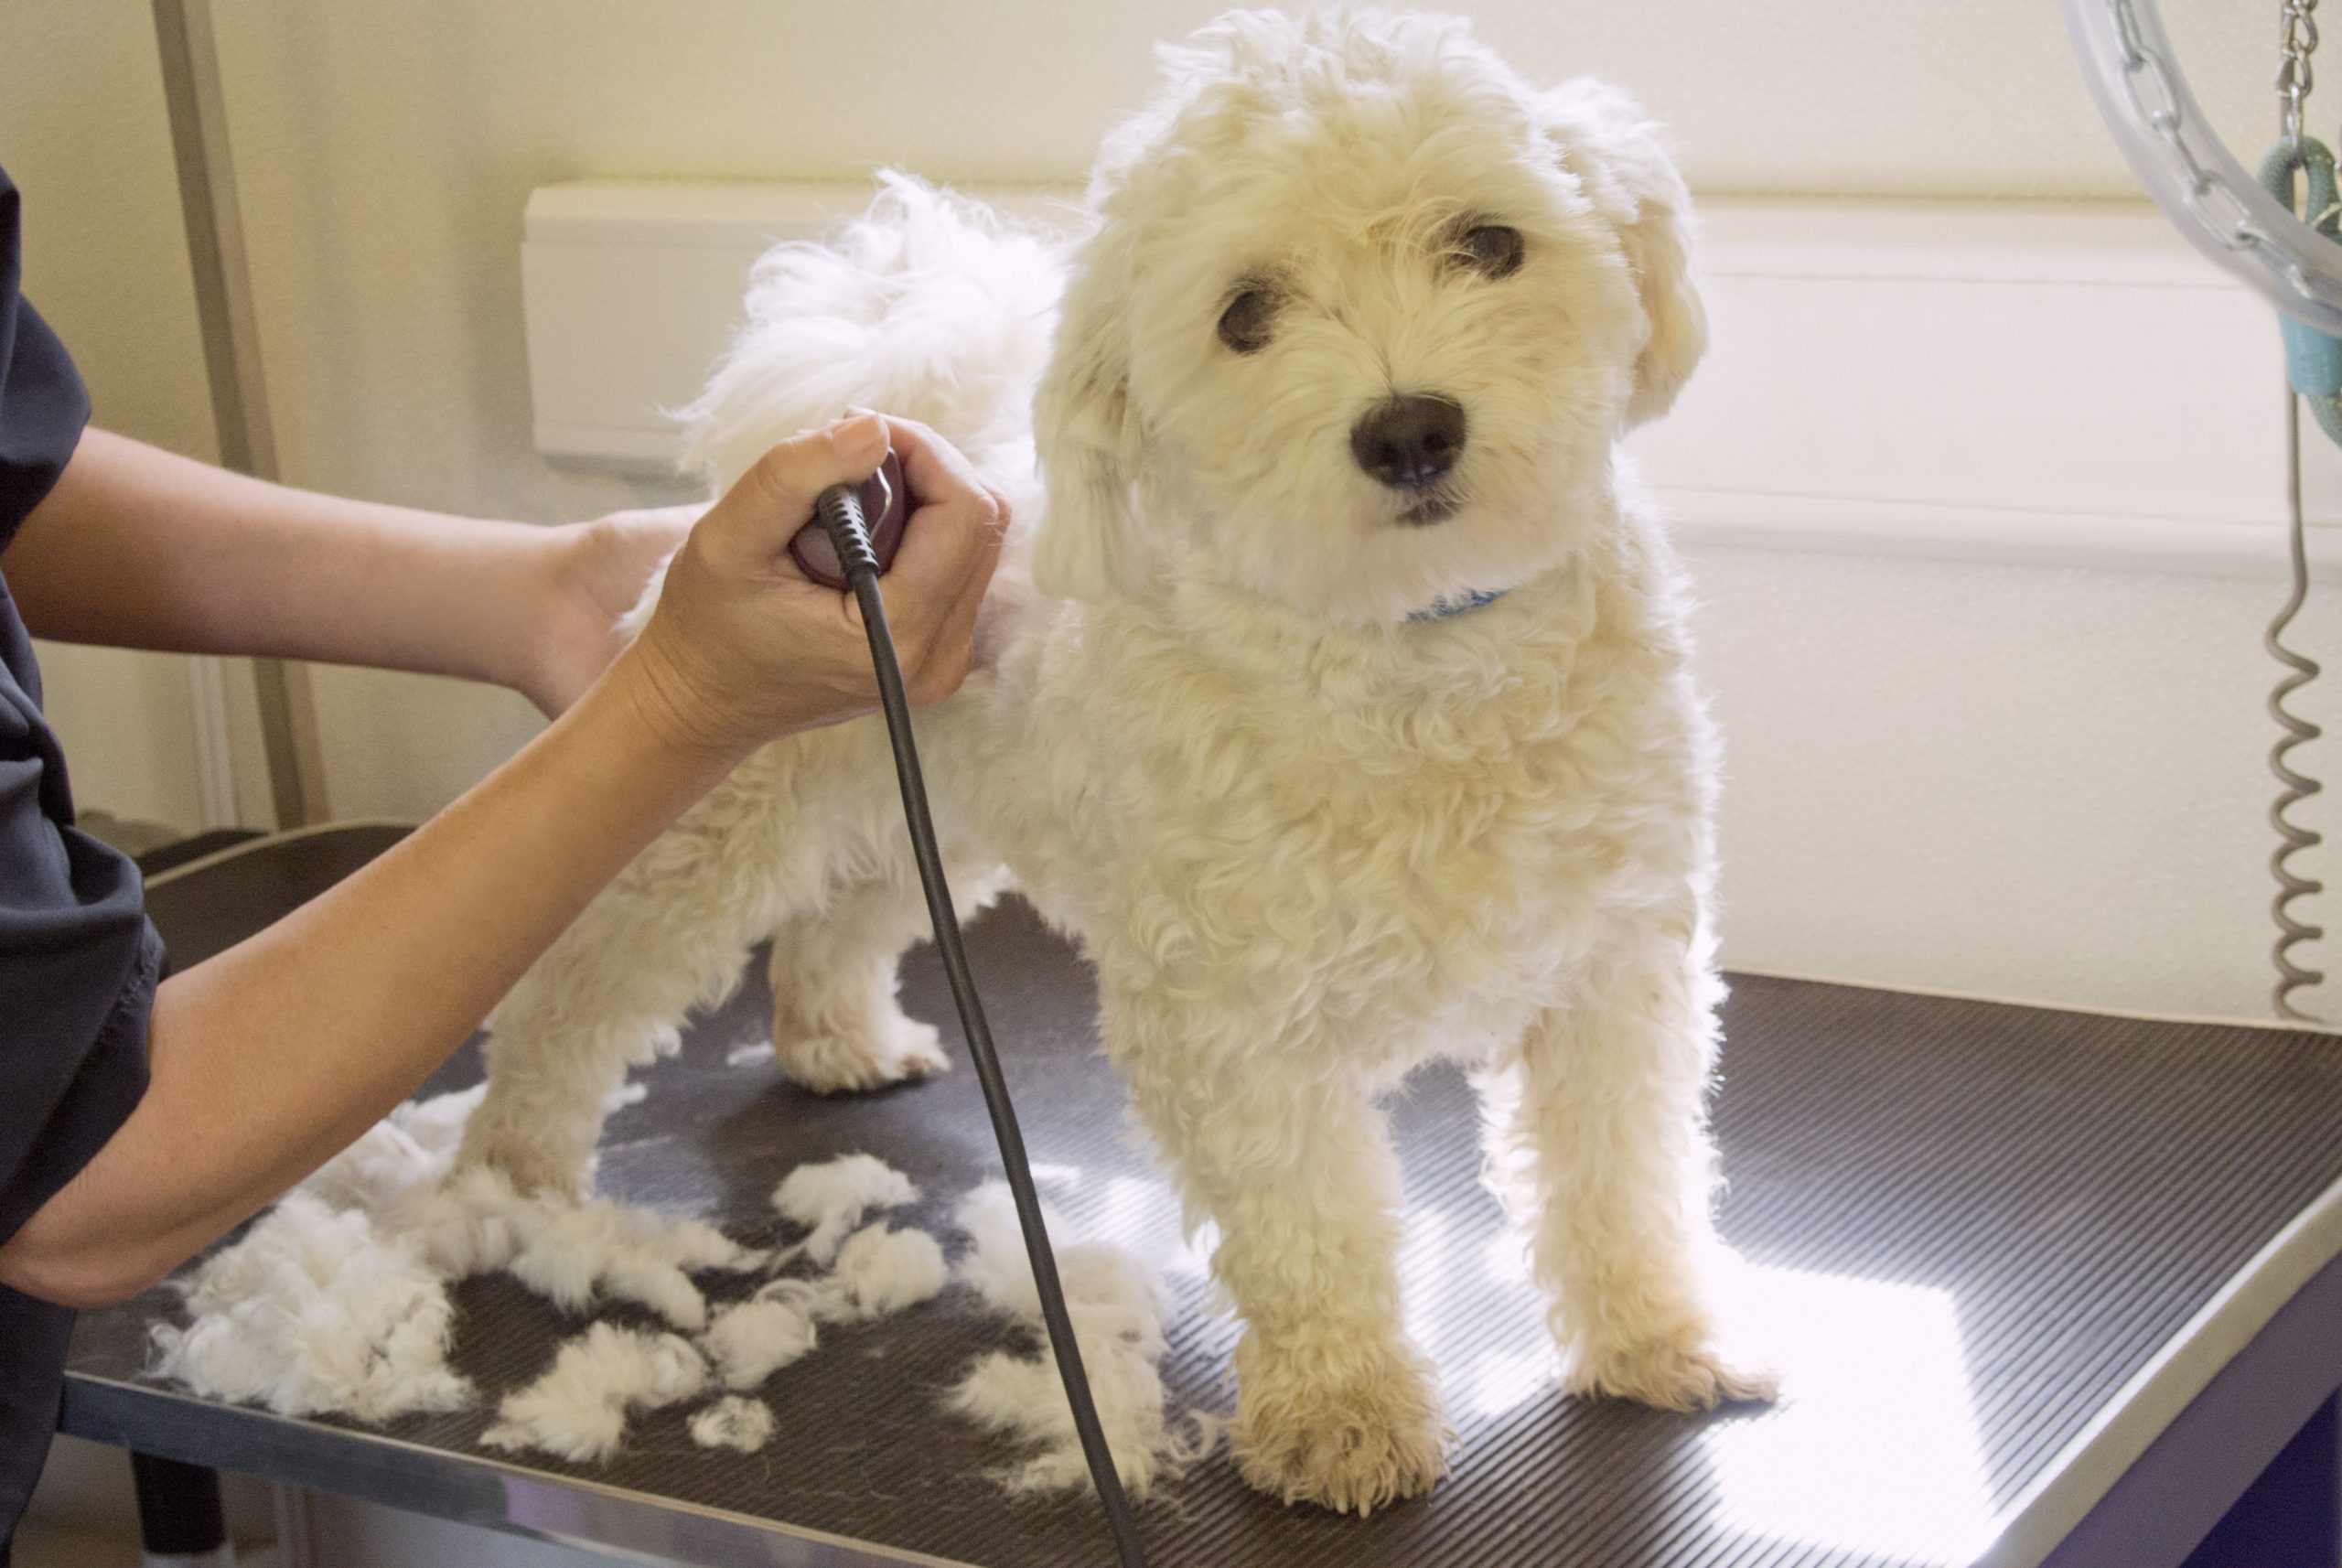 dog grooming service dubai